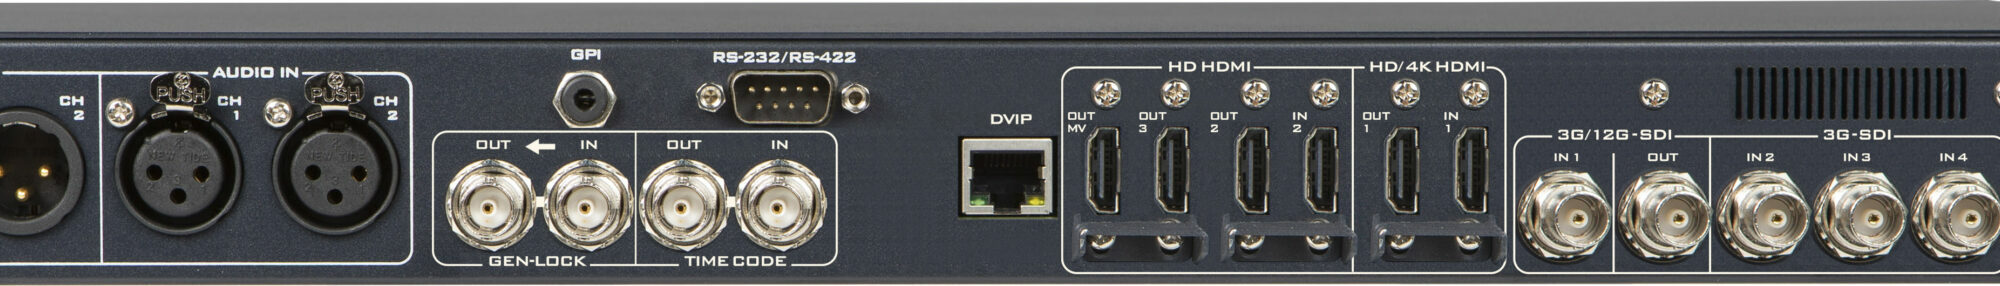 HDR-90 datavideo Enregistreur 4 canaux 3G-SDI